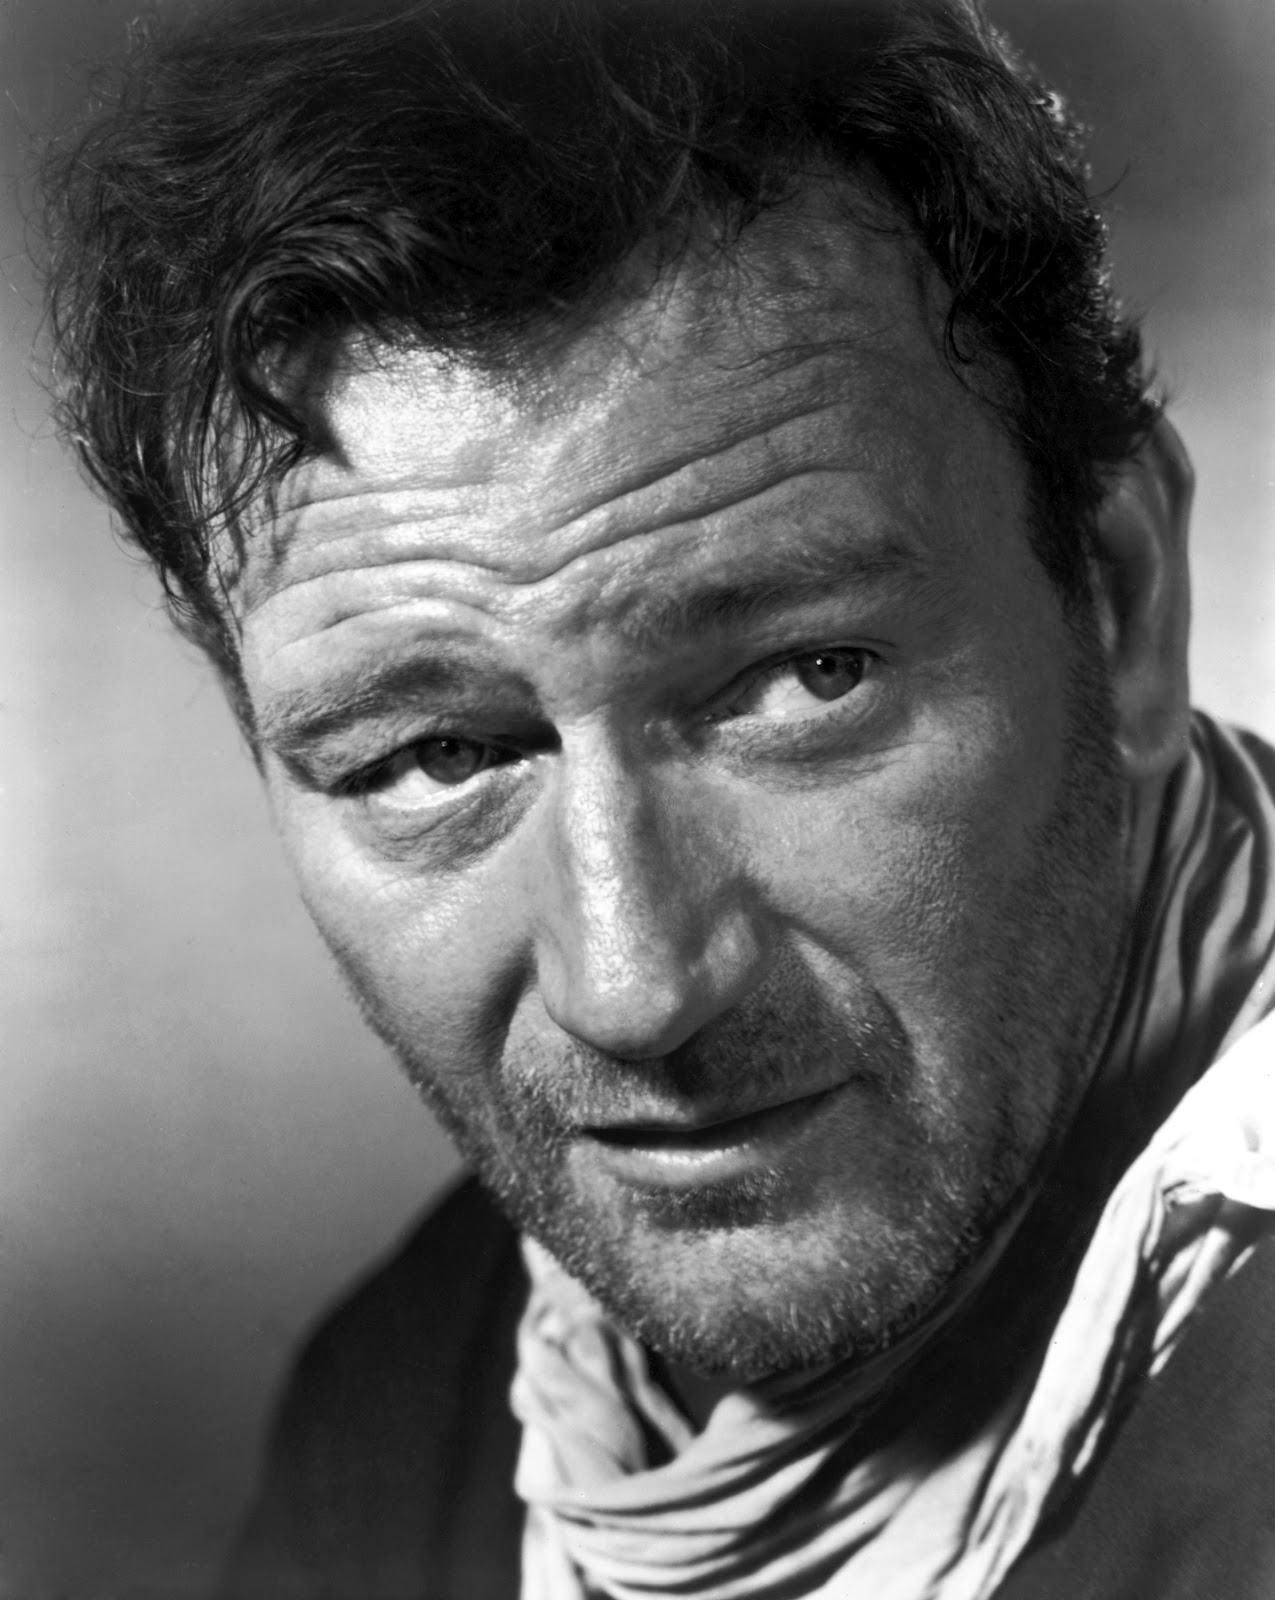 Carroll Bryant: Legends: John Wayne "The Duke"
